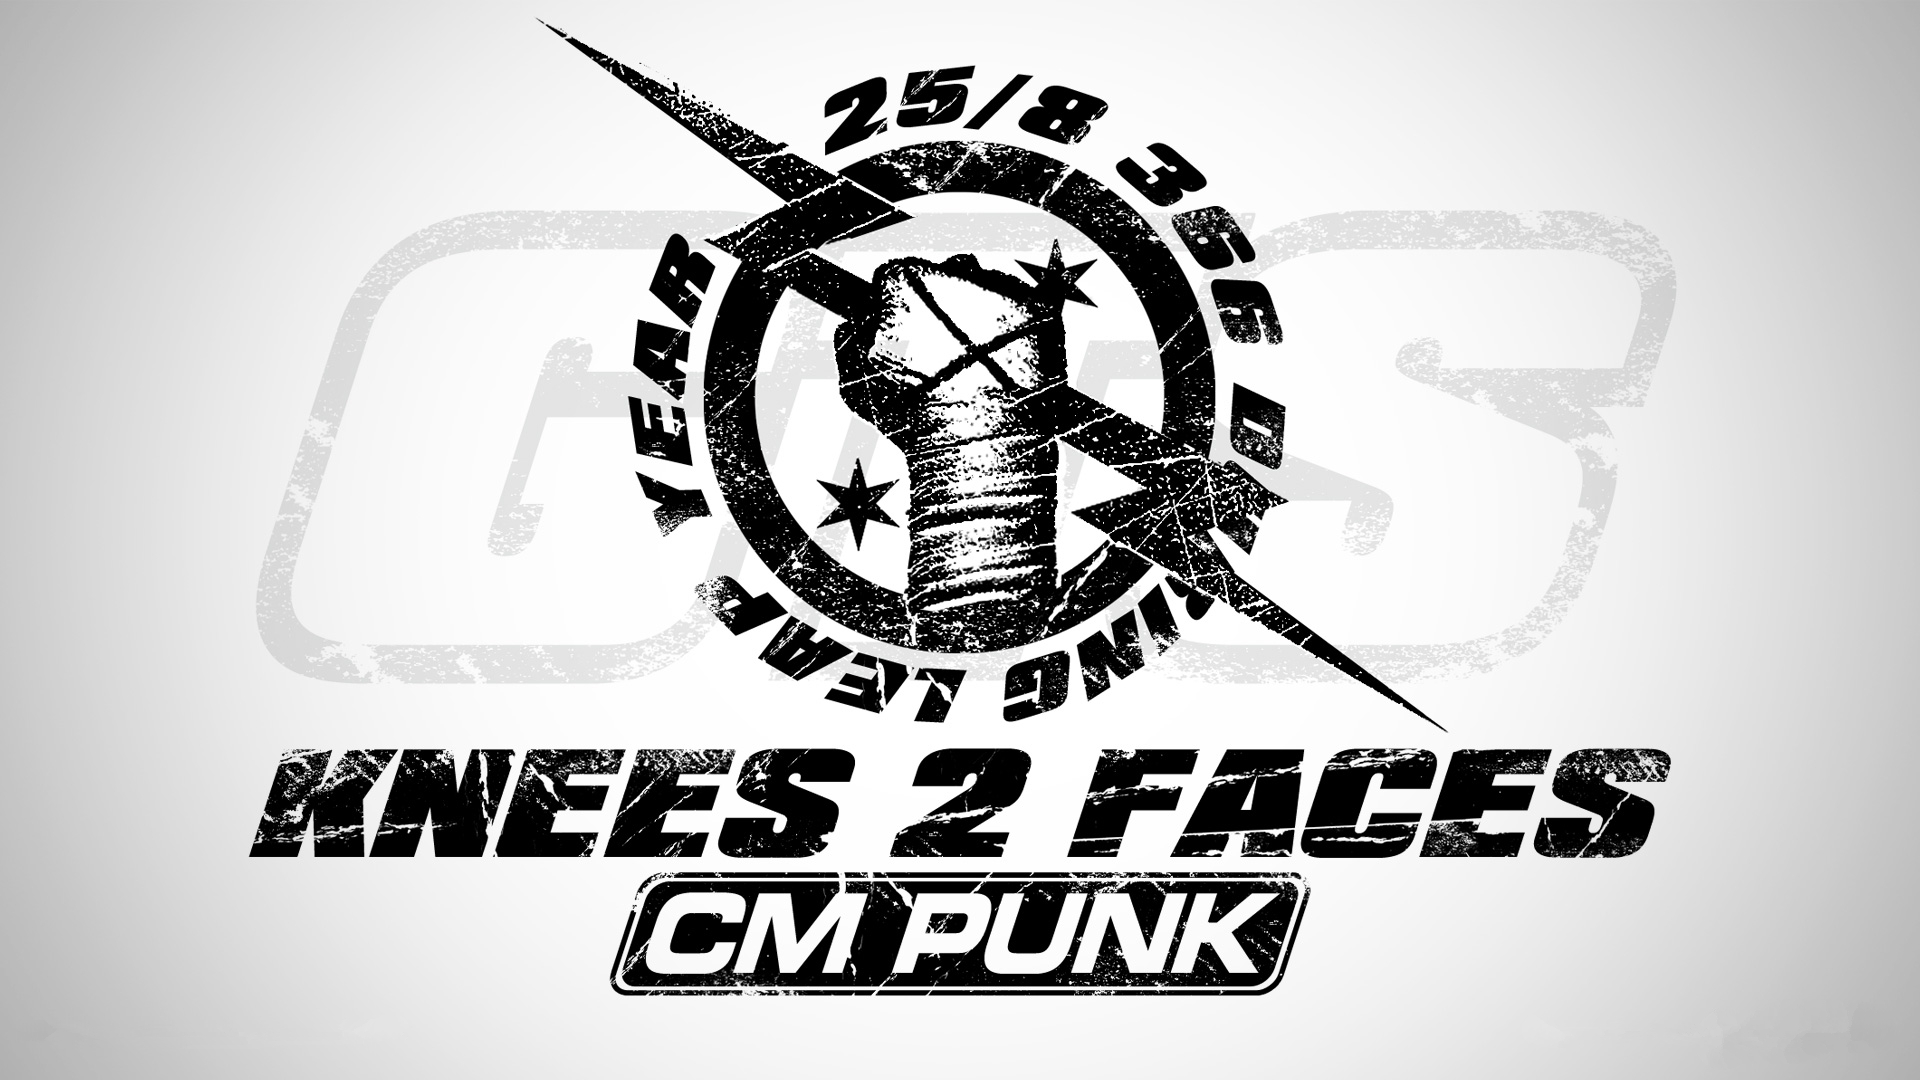 Cm Punk HD Wallpaper